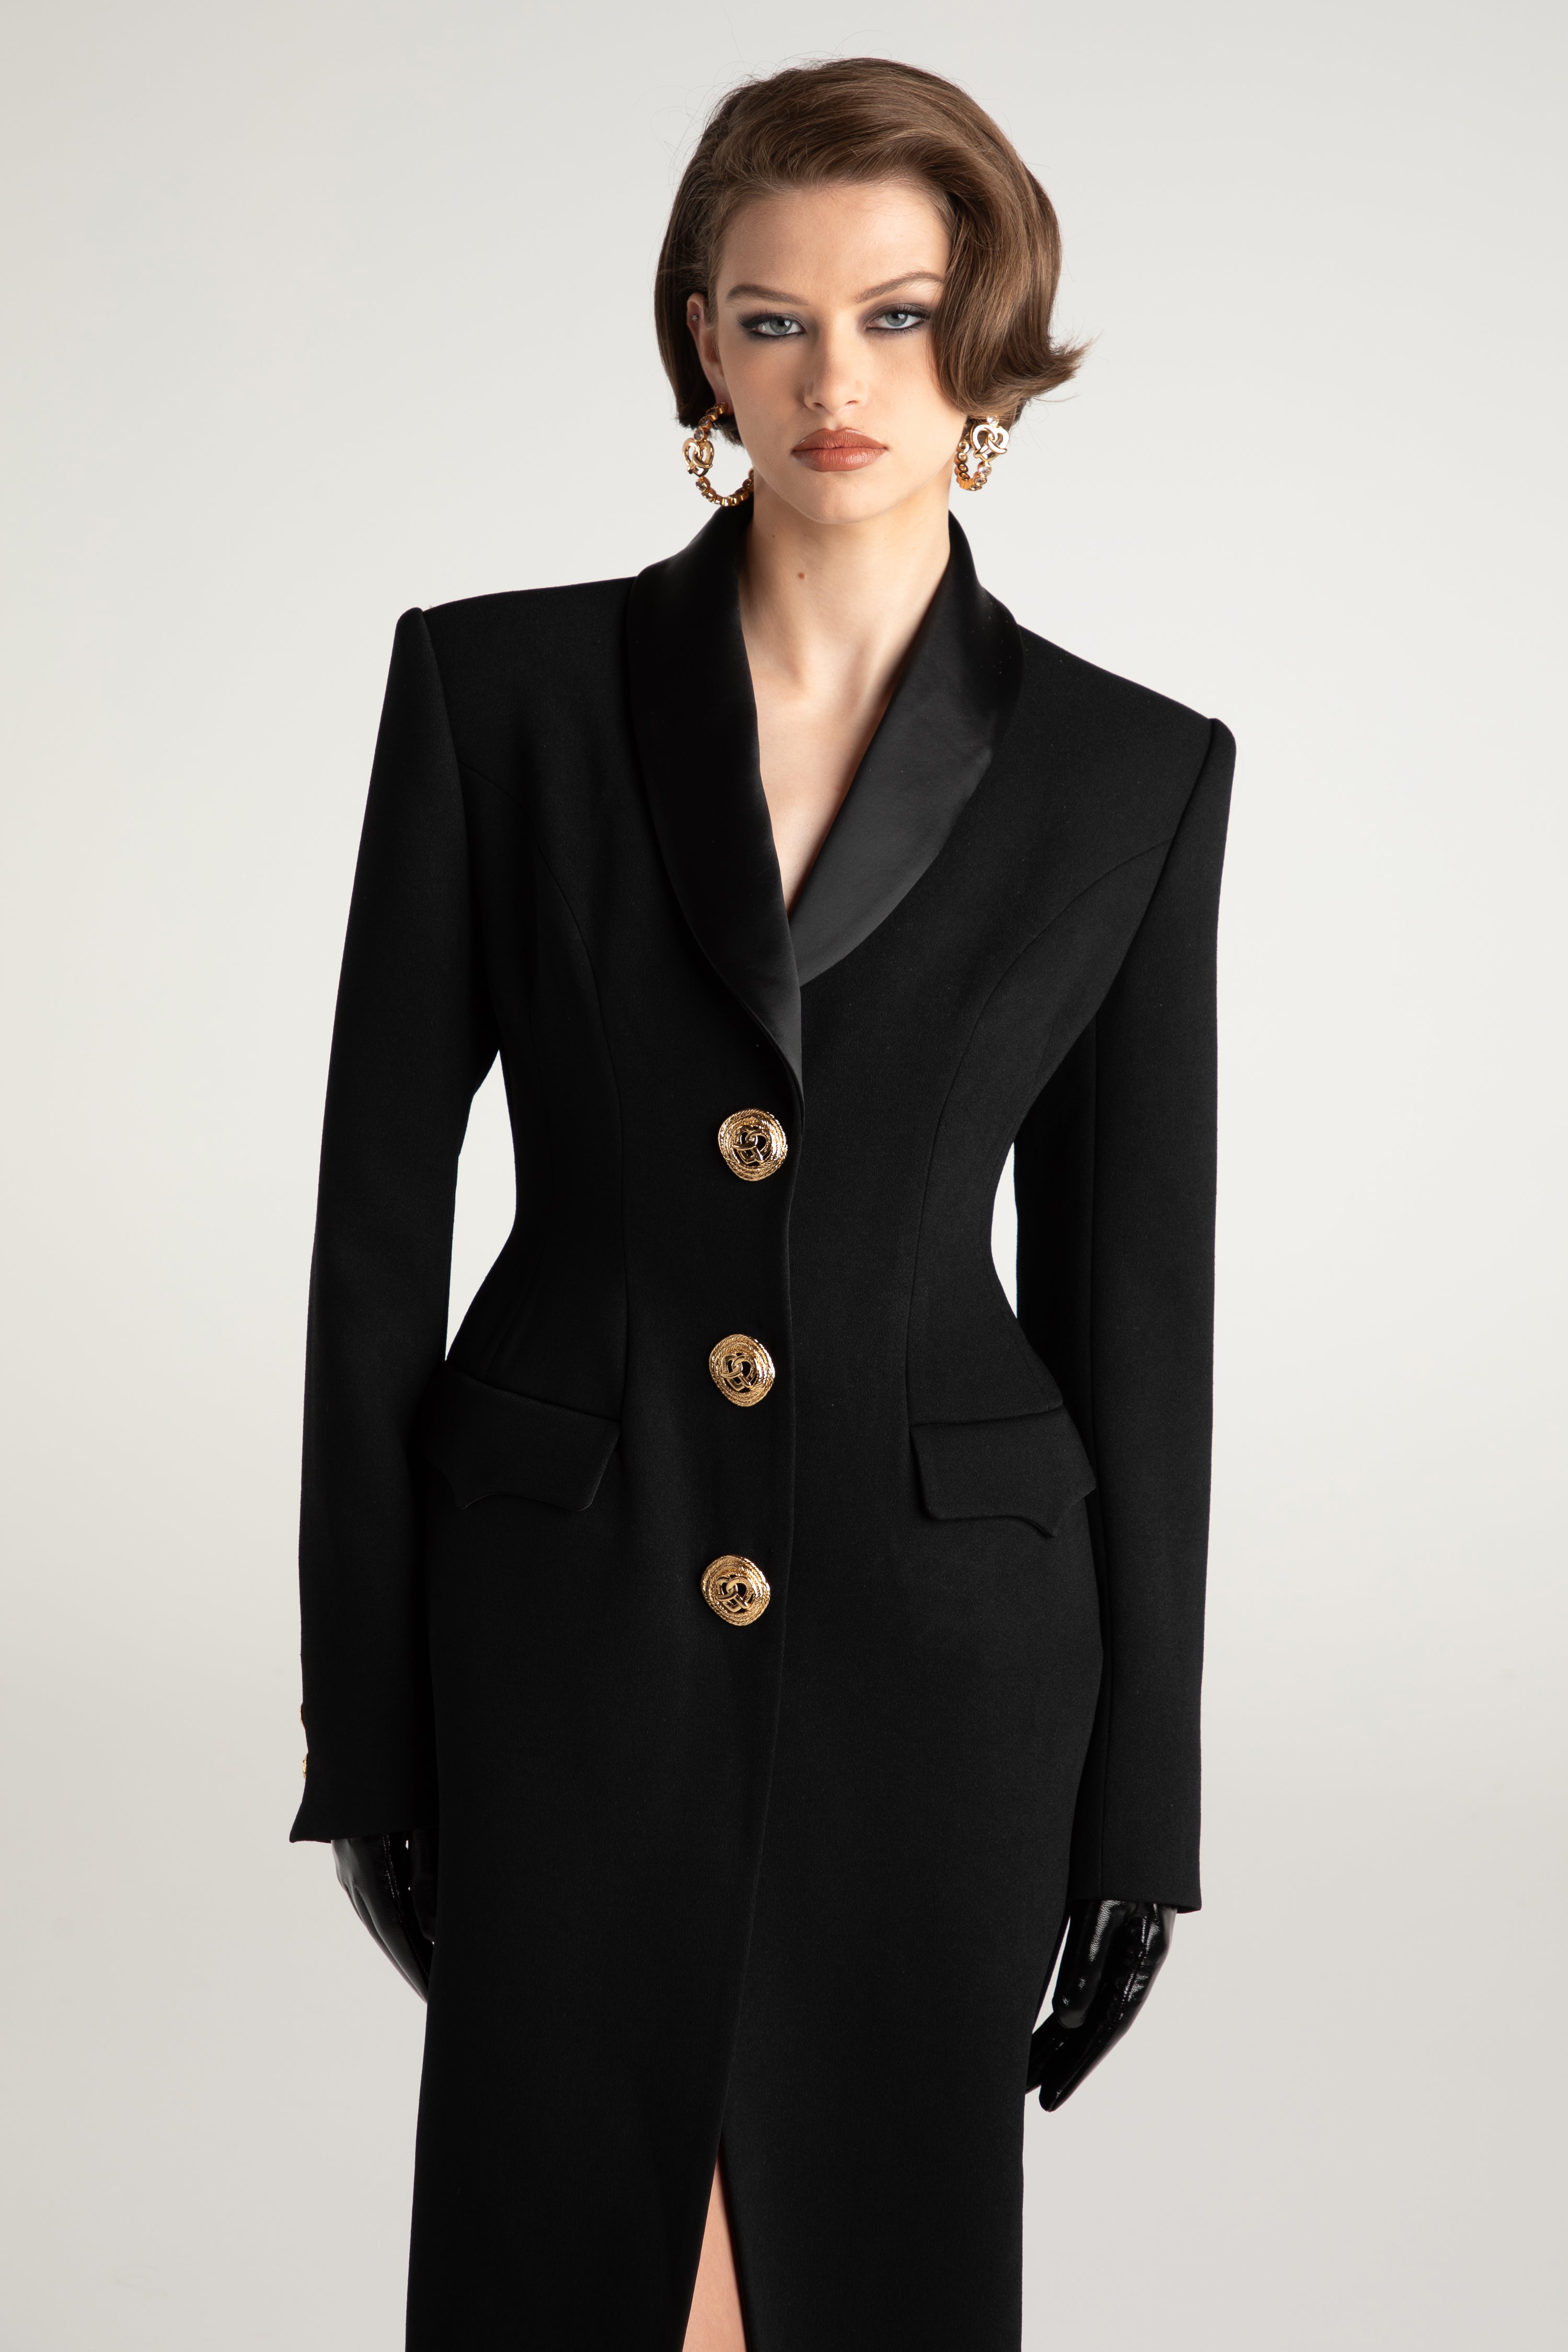 Women's Casual Long Blazers Long Sleeve Lapel Button Oversized Suit Jacket  Elegant Work Office Blazer Jackets Beige at Amazon Women's Clothing store